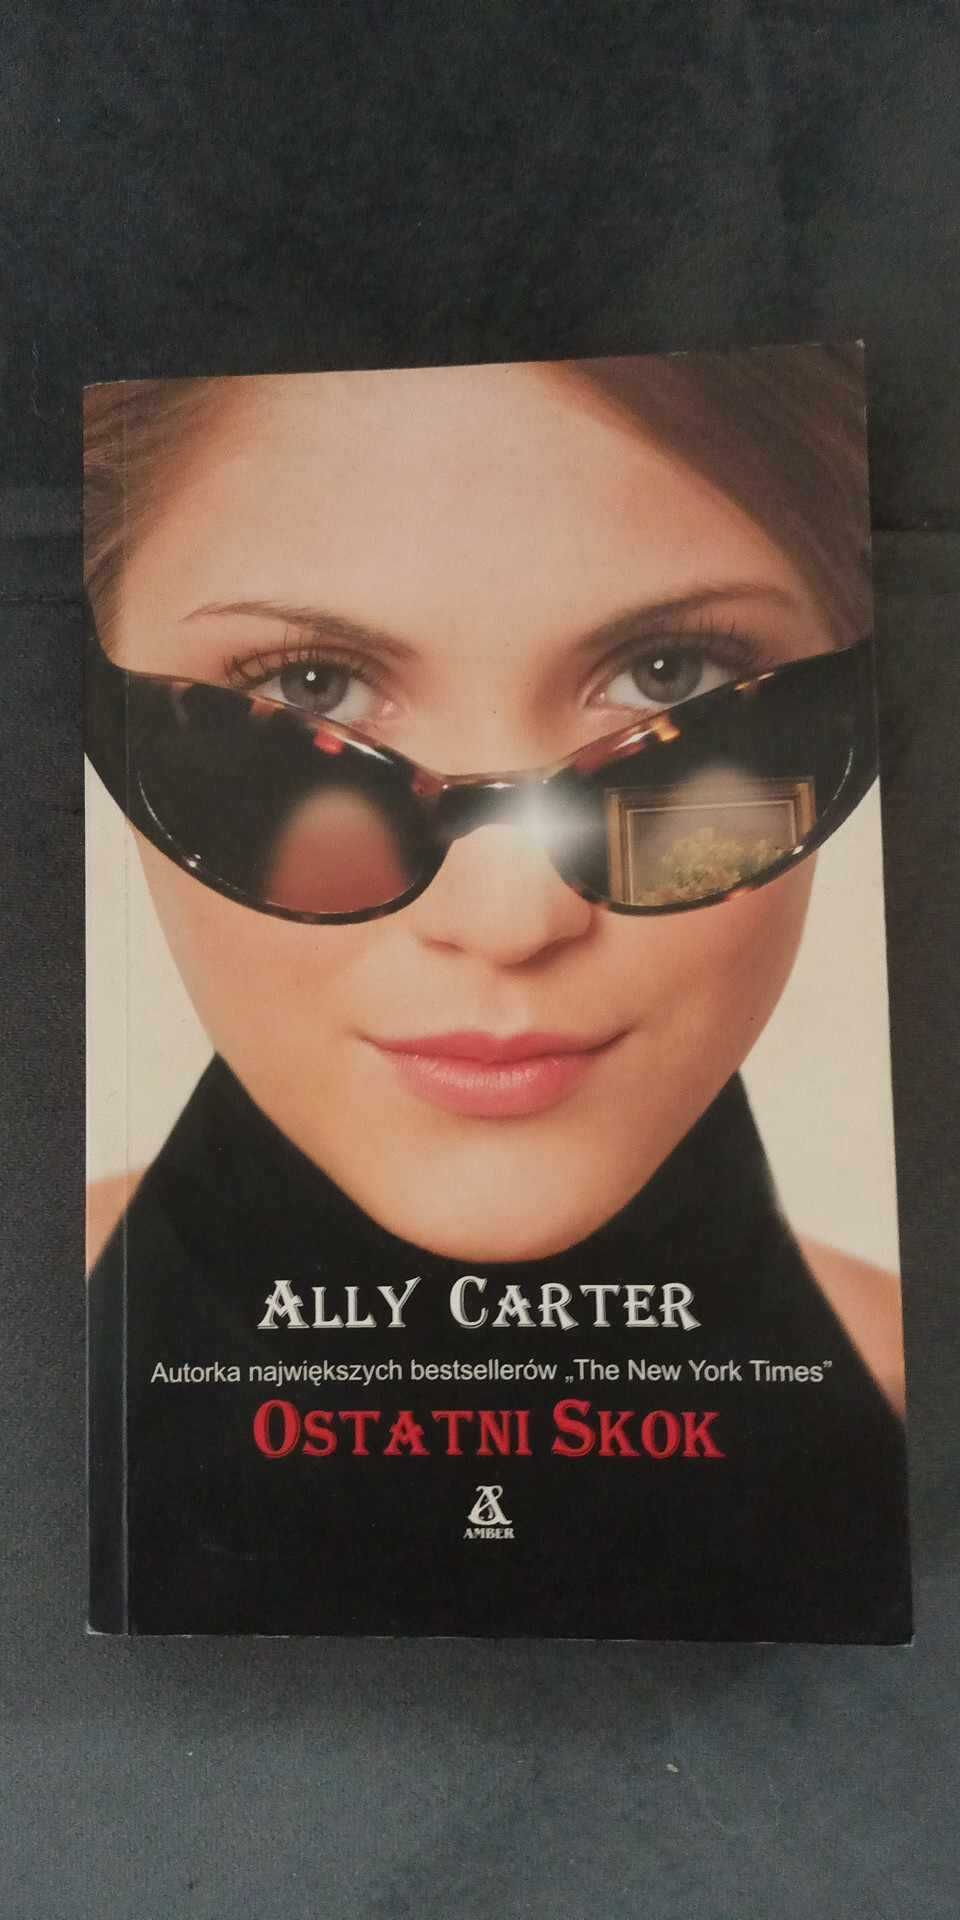 Ally Carter - Ostatni skok (książka)